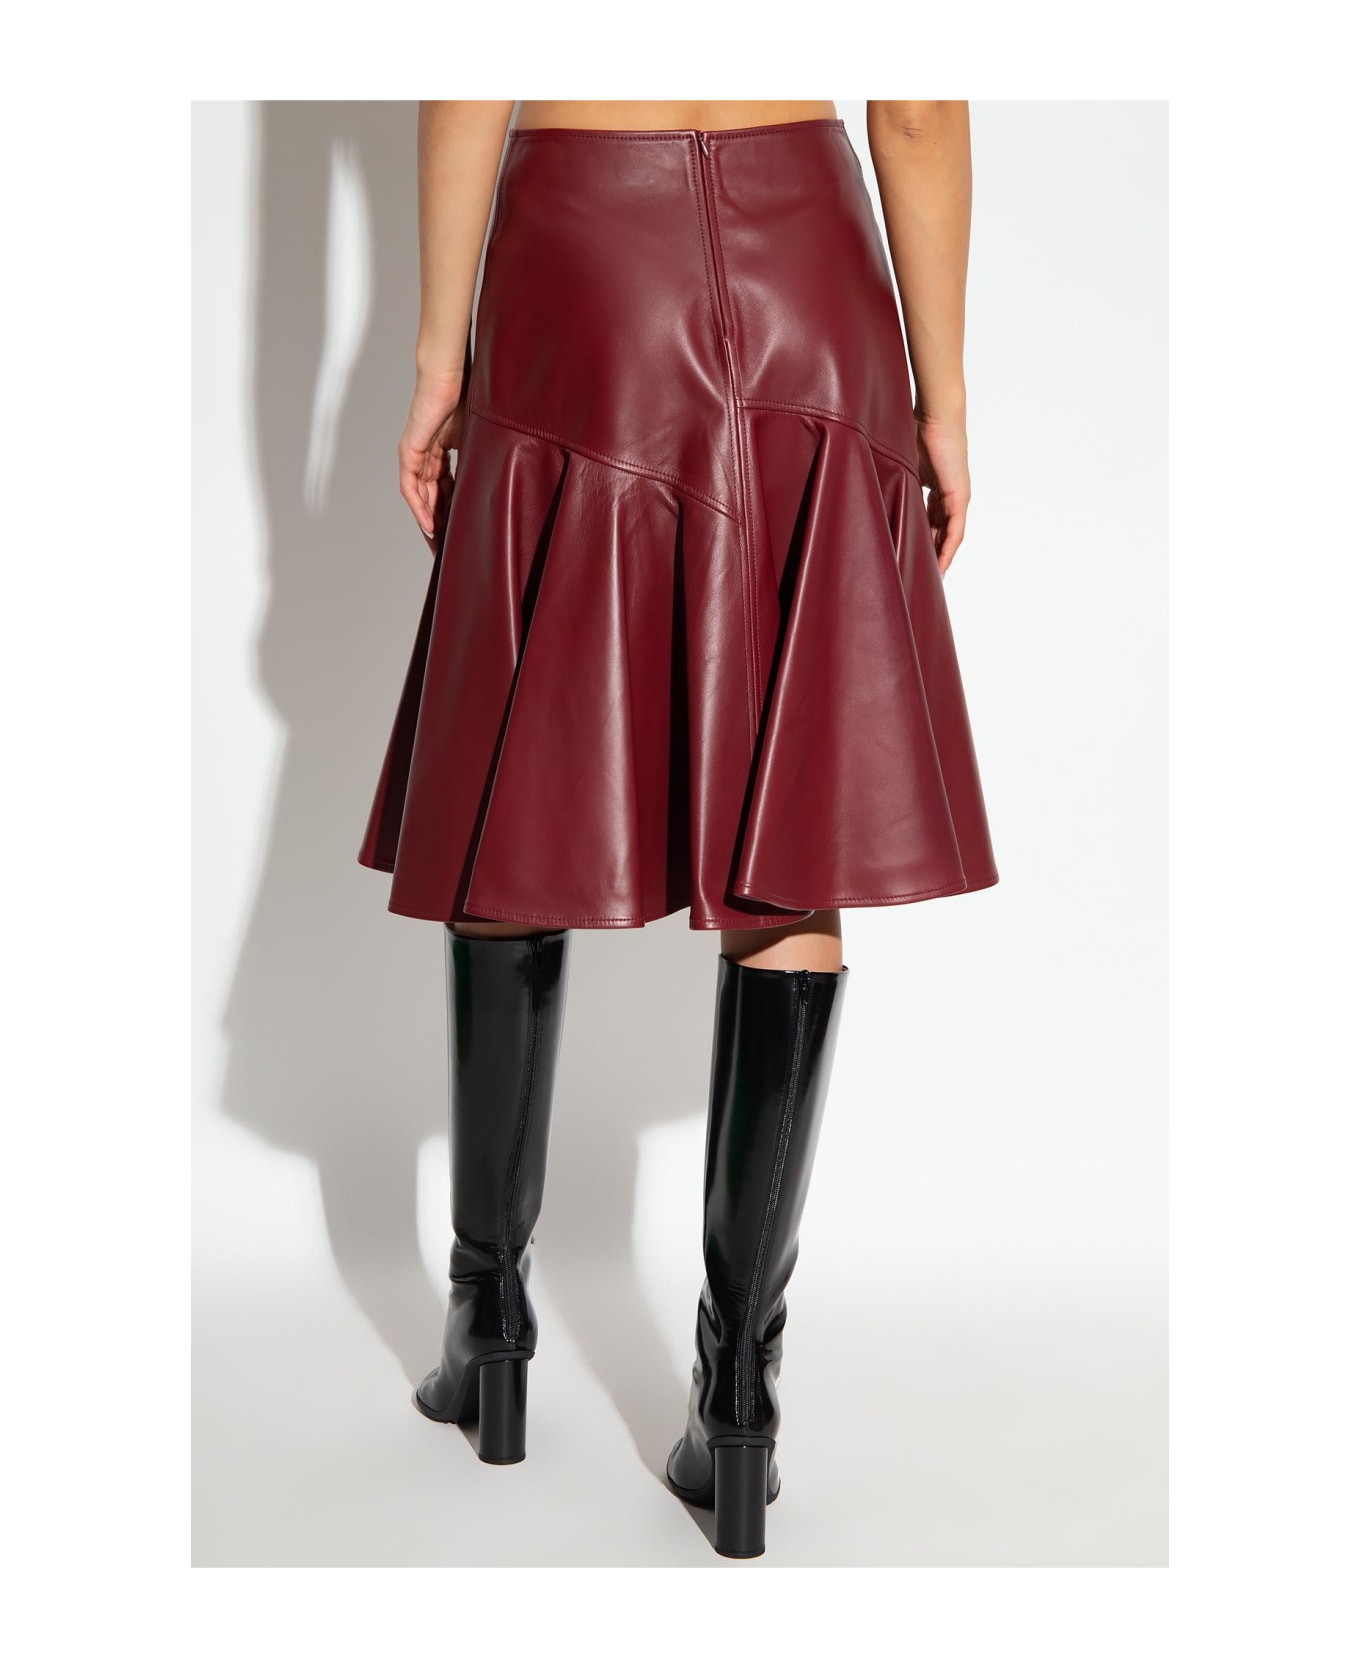 Bottega Veneta Leather Skirt - Bordeaux スカート